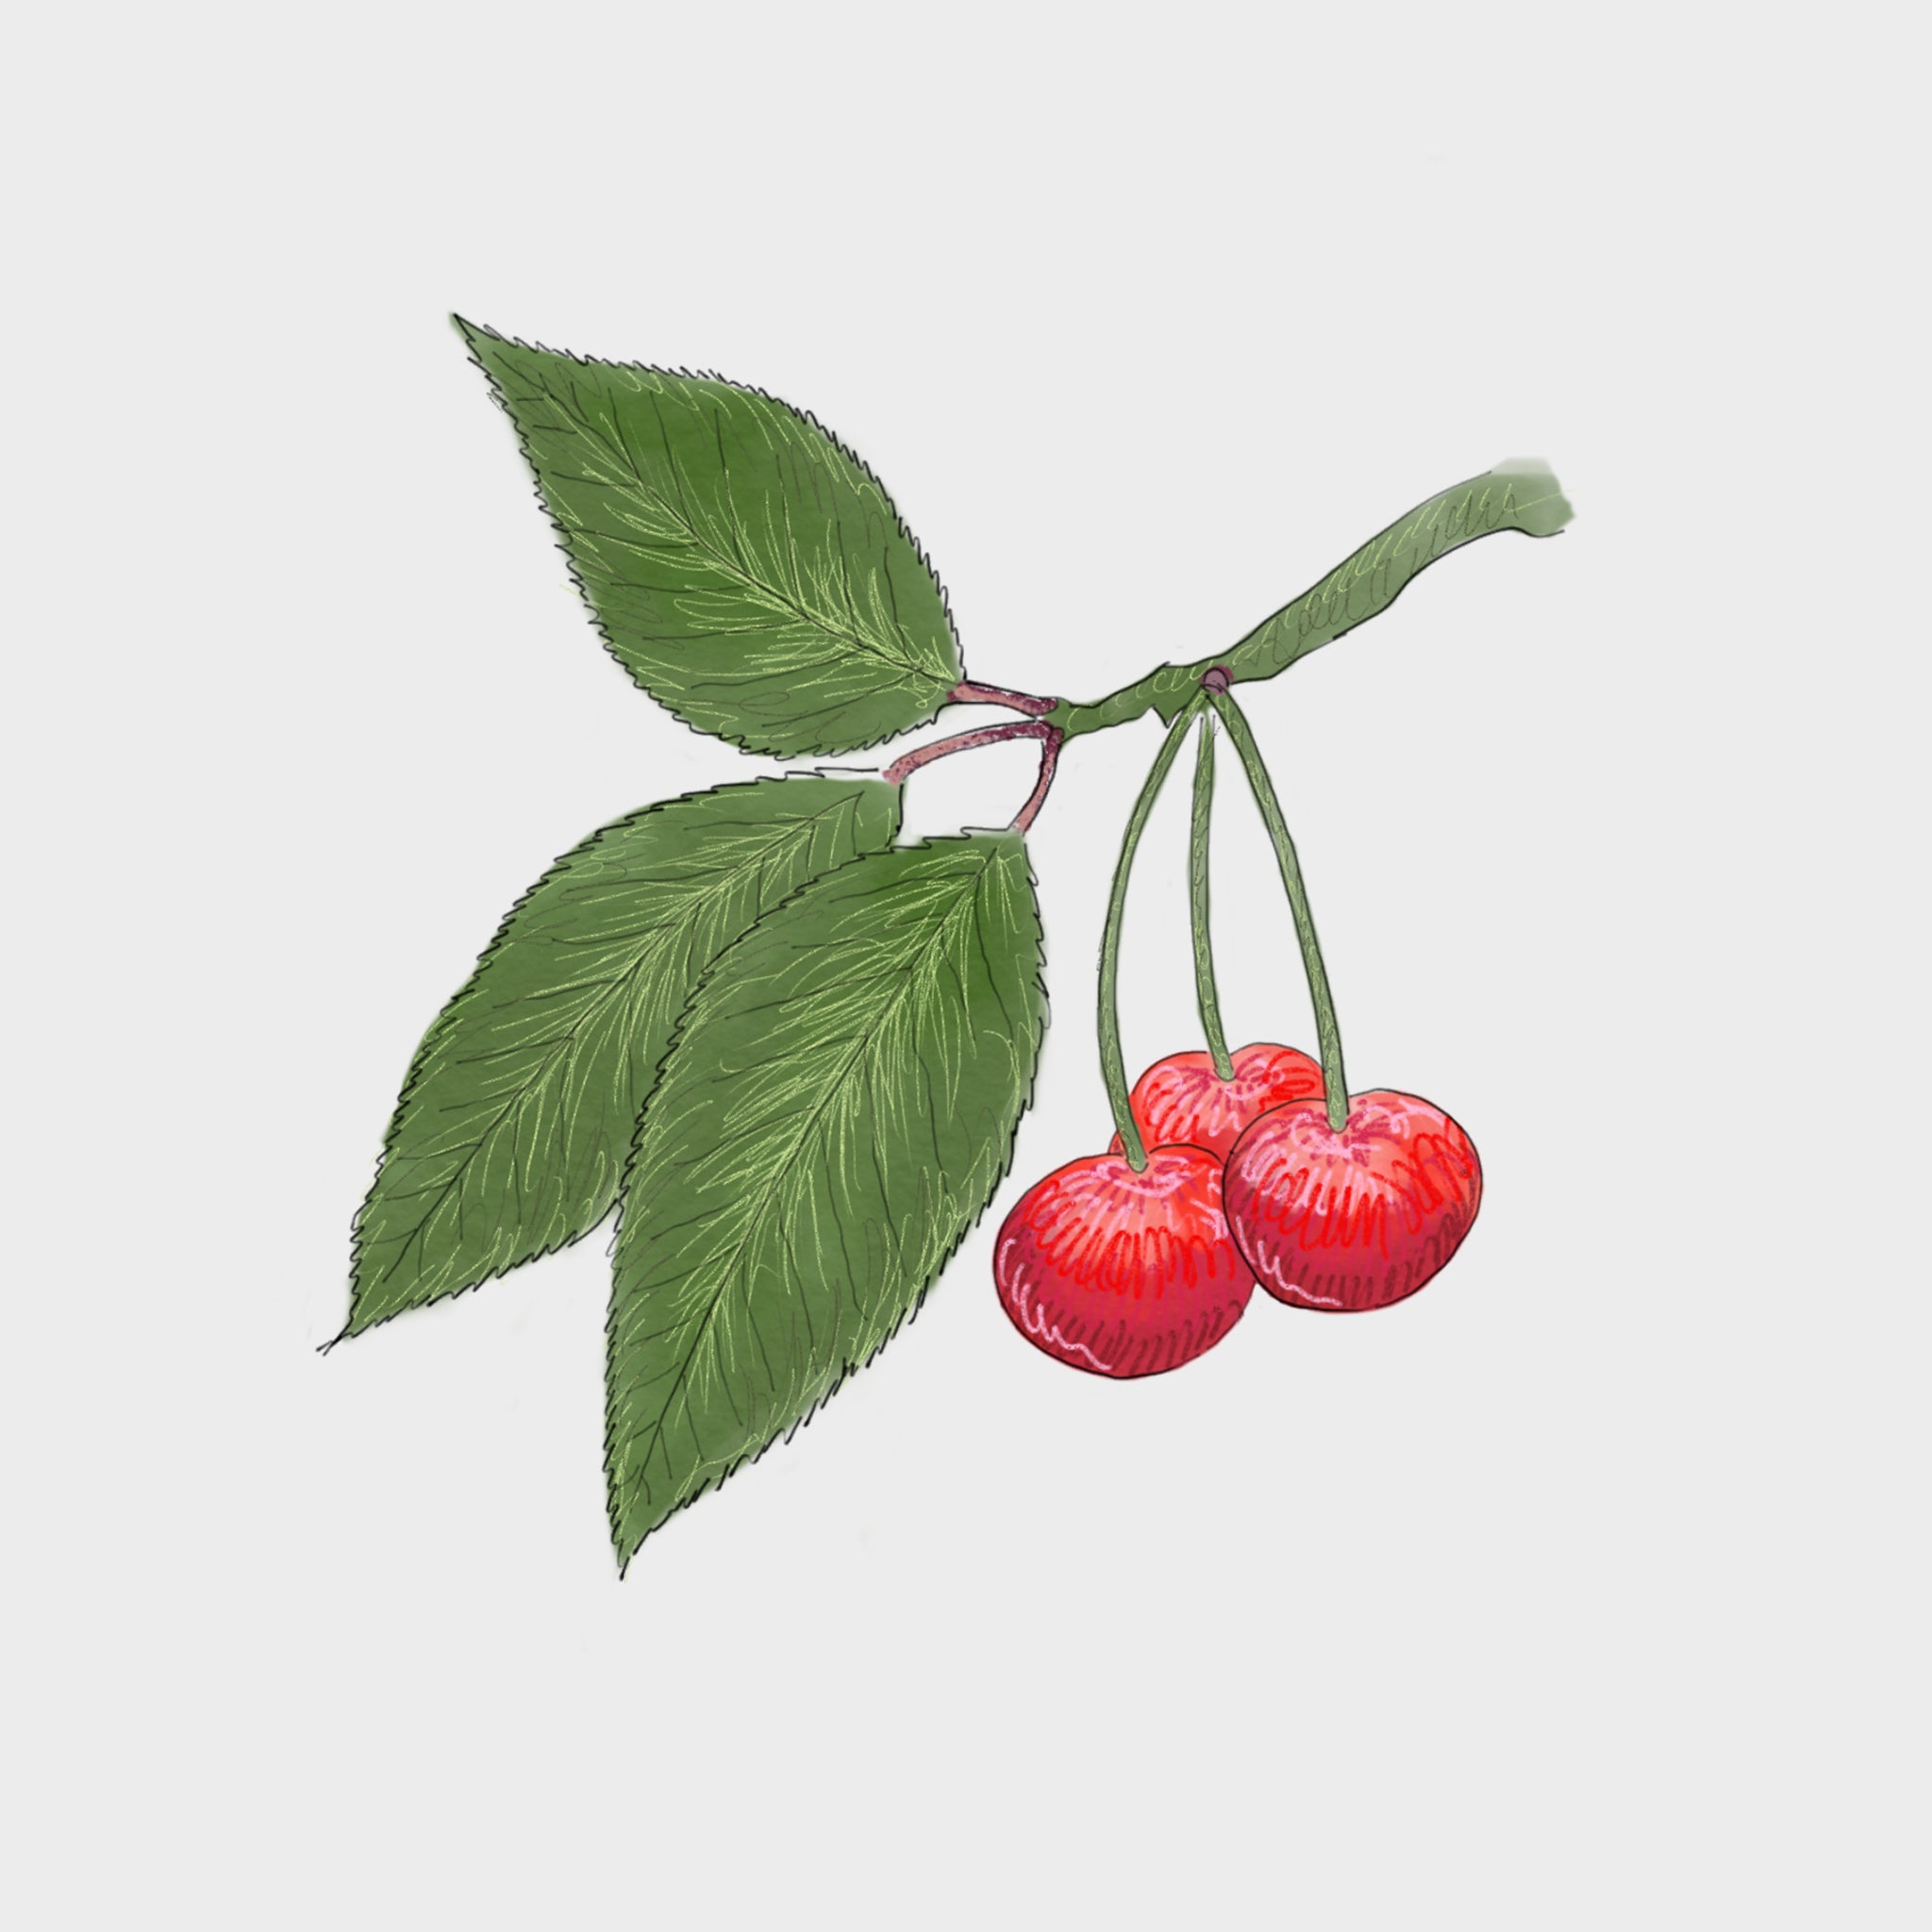 Montmorency Tart Cherries: A Natural Sleep Aid and Antioxidant